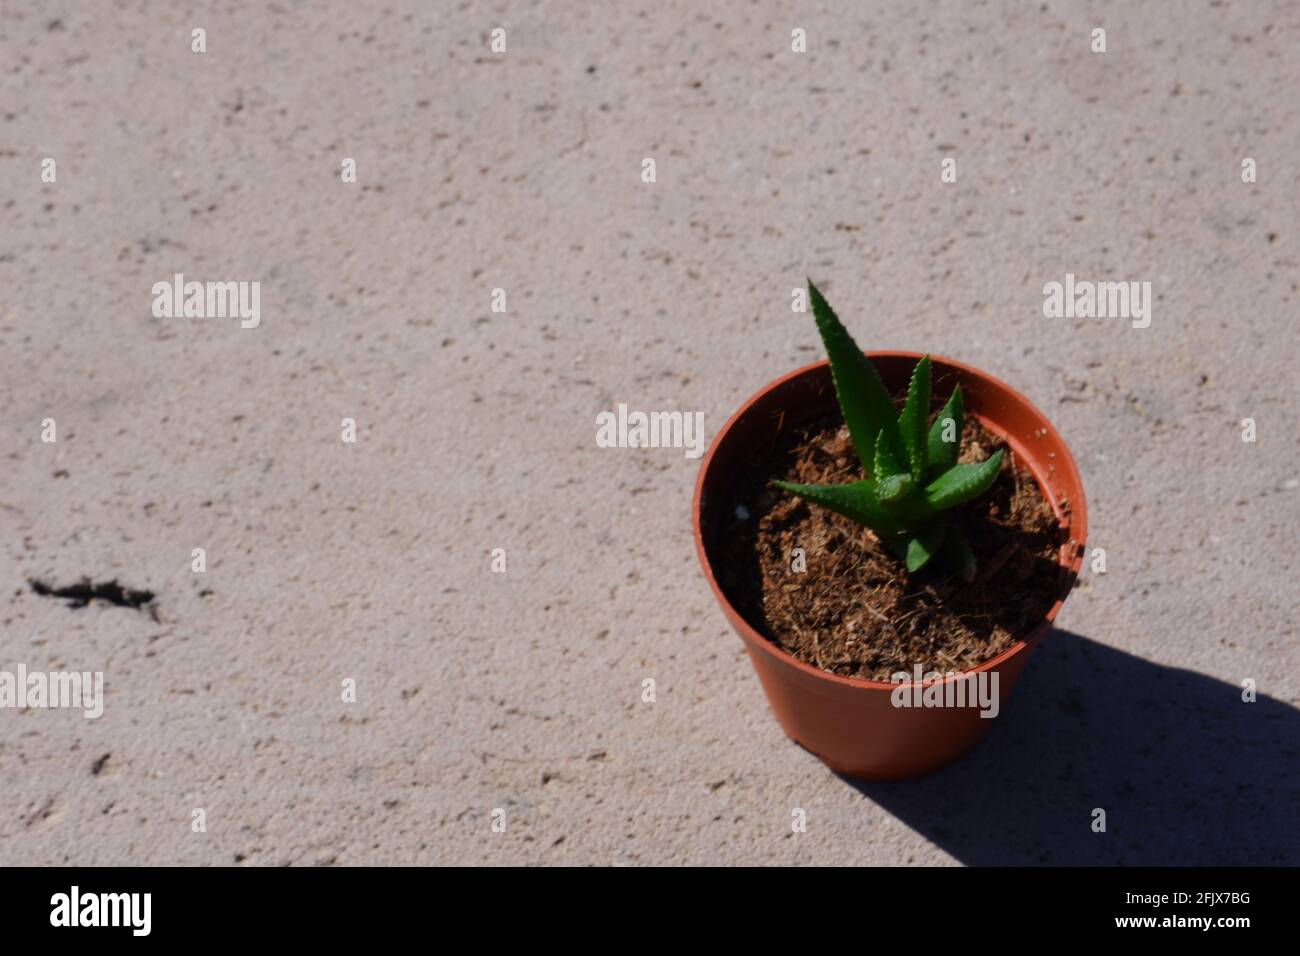 Haworthia fasciata on stone in pot outdoor with sunlight Stock Photo